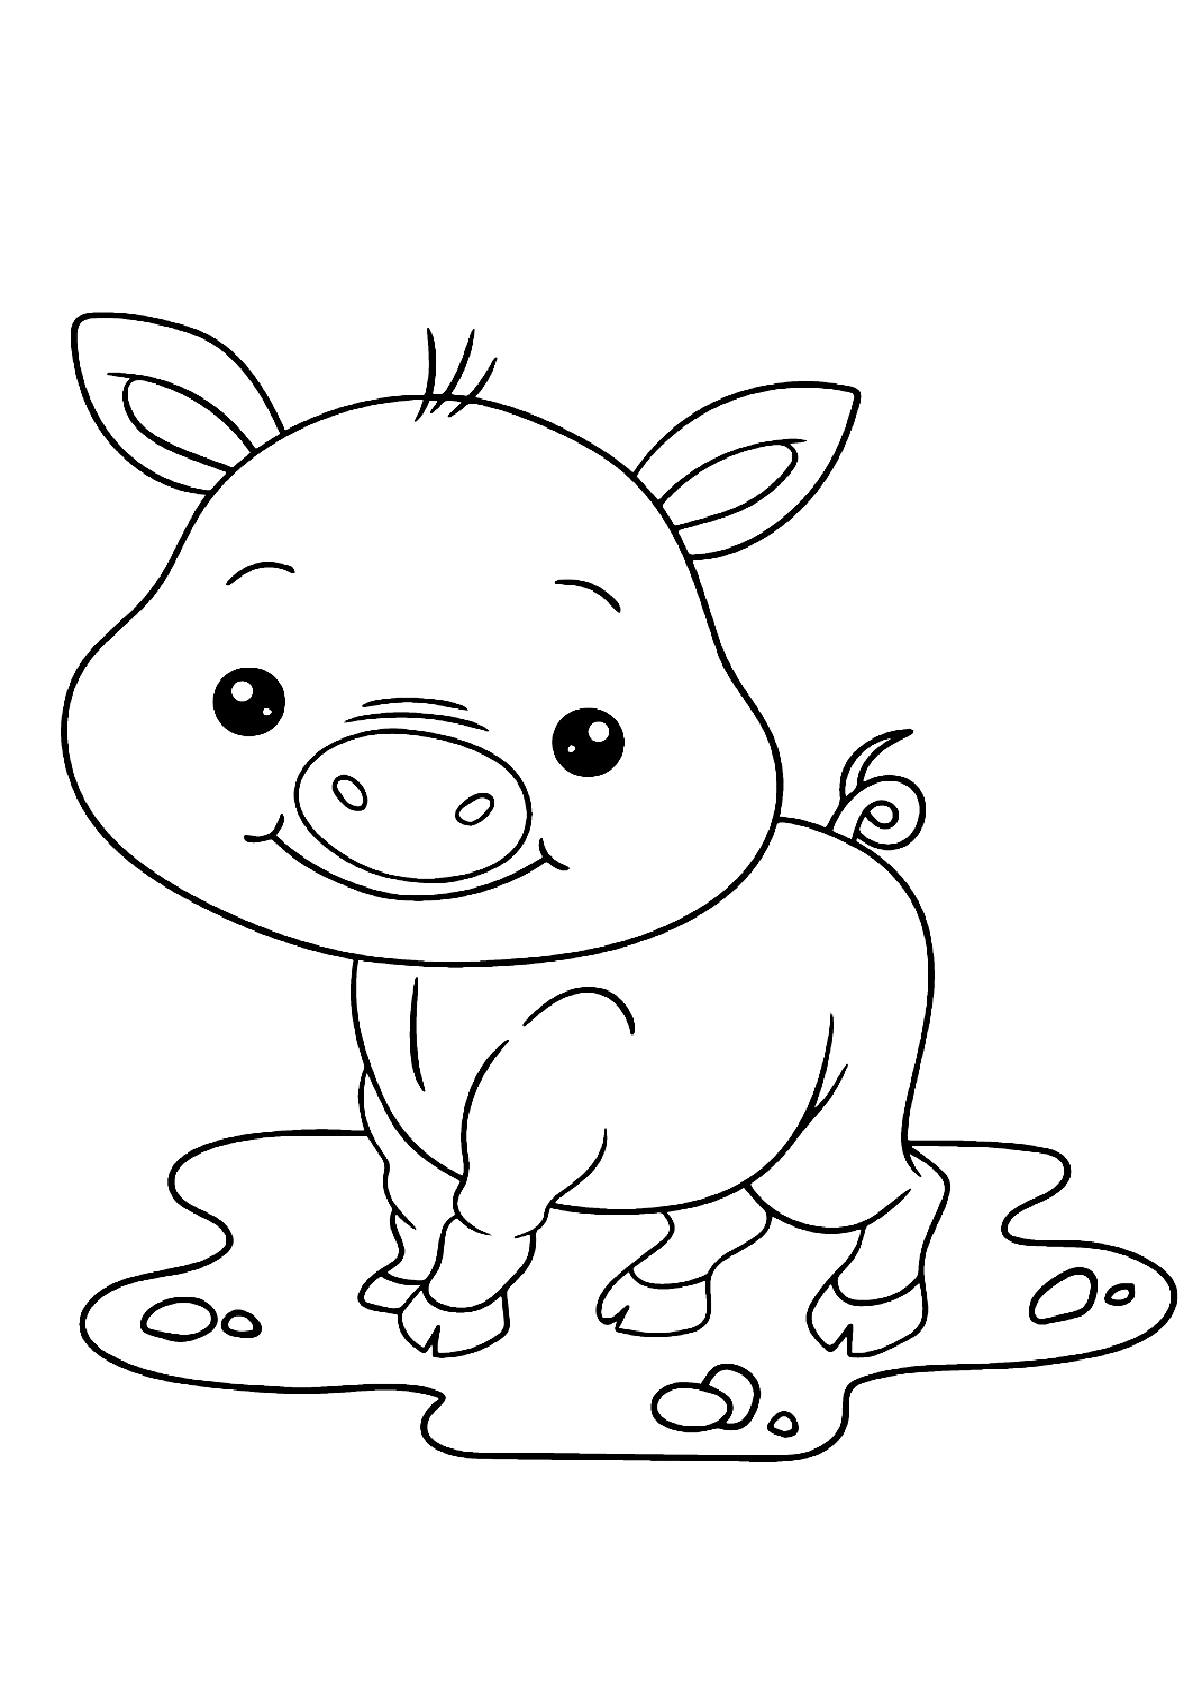 Раскраска Свинка в лужице